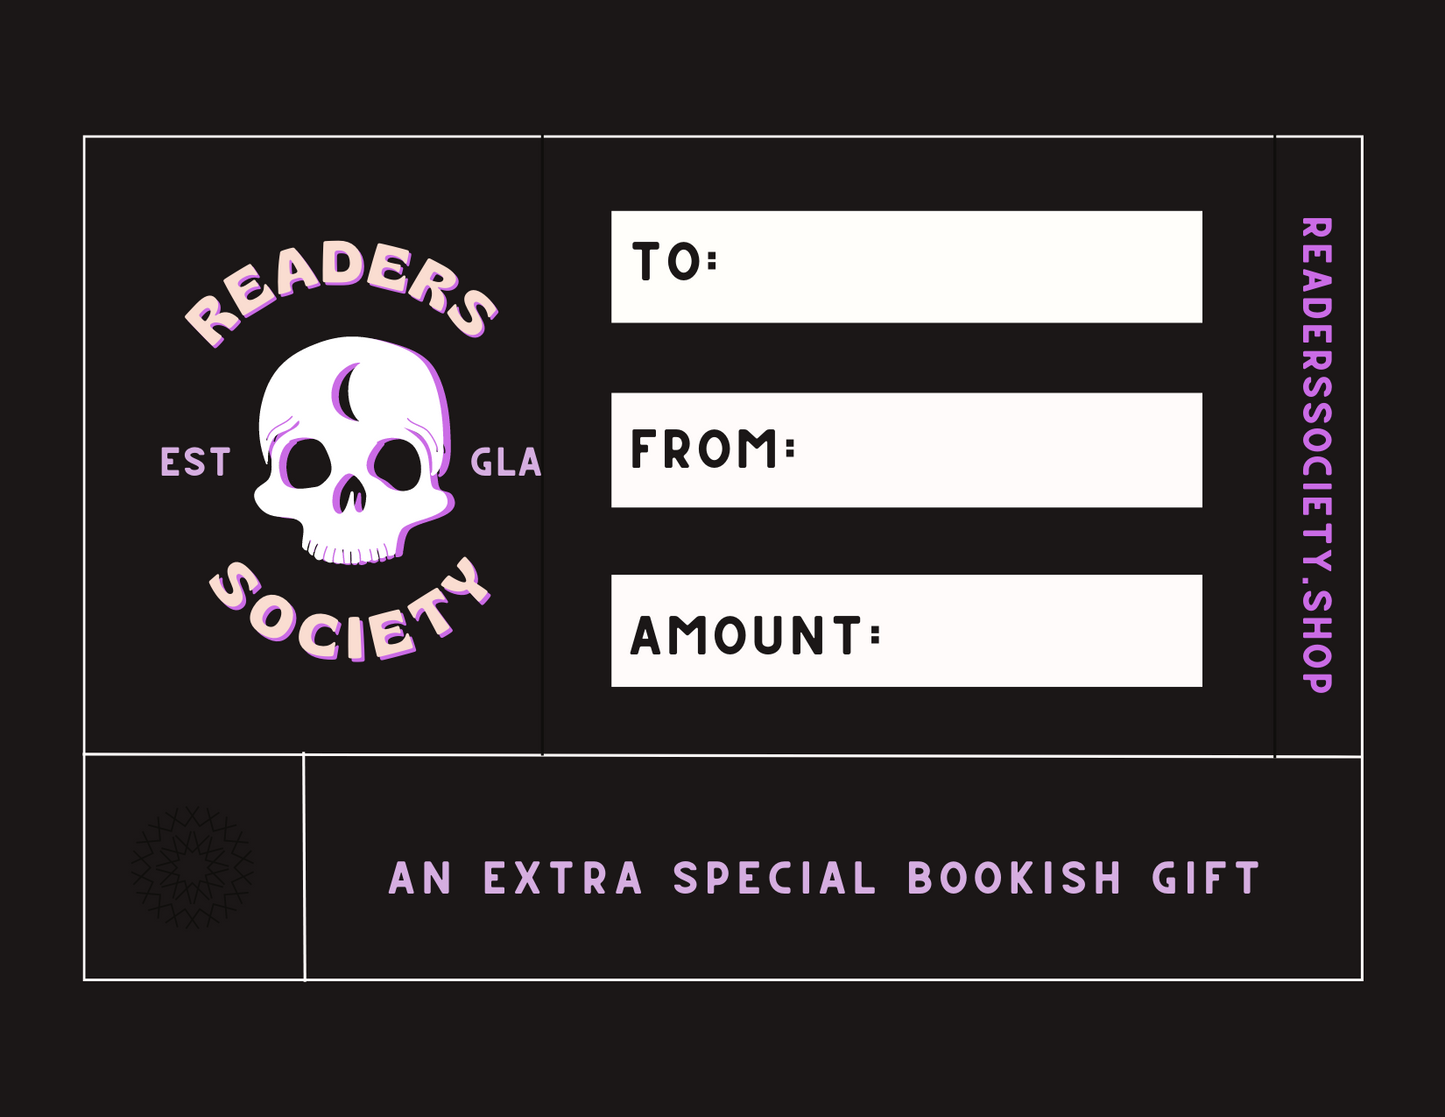 Readers Society Gift Card